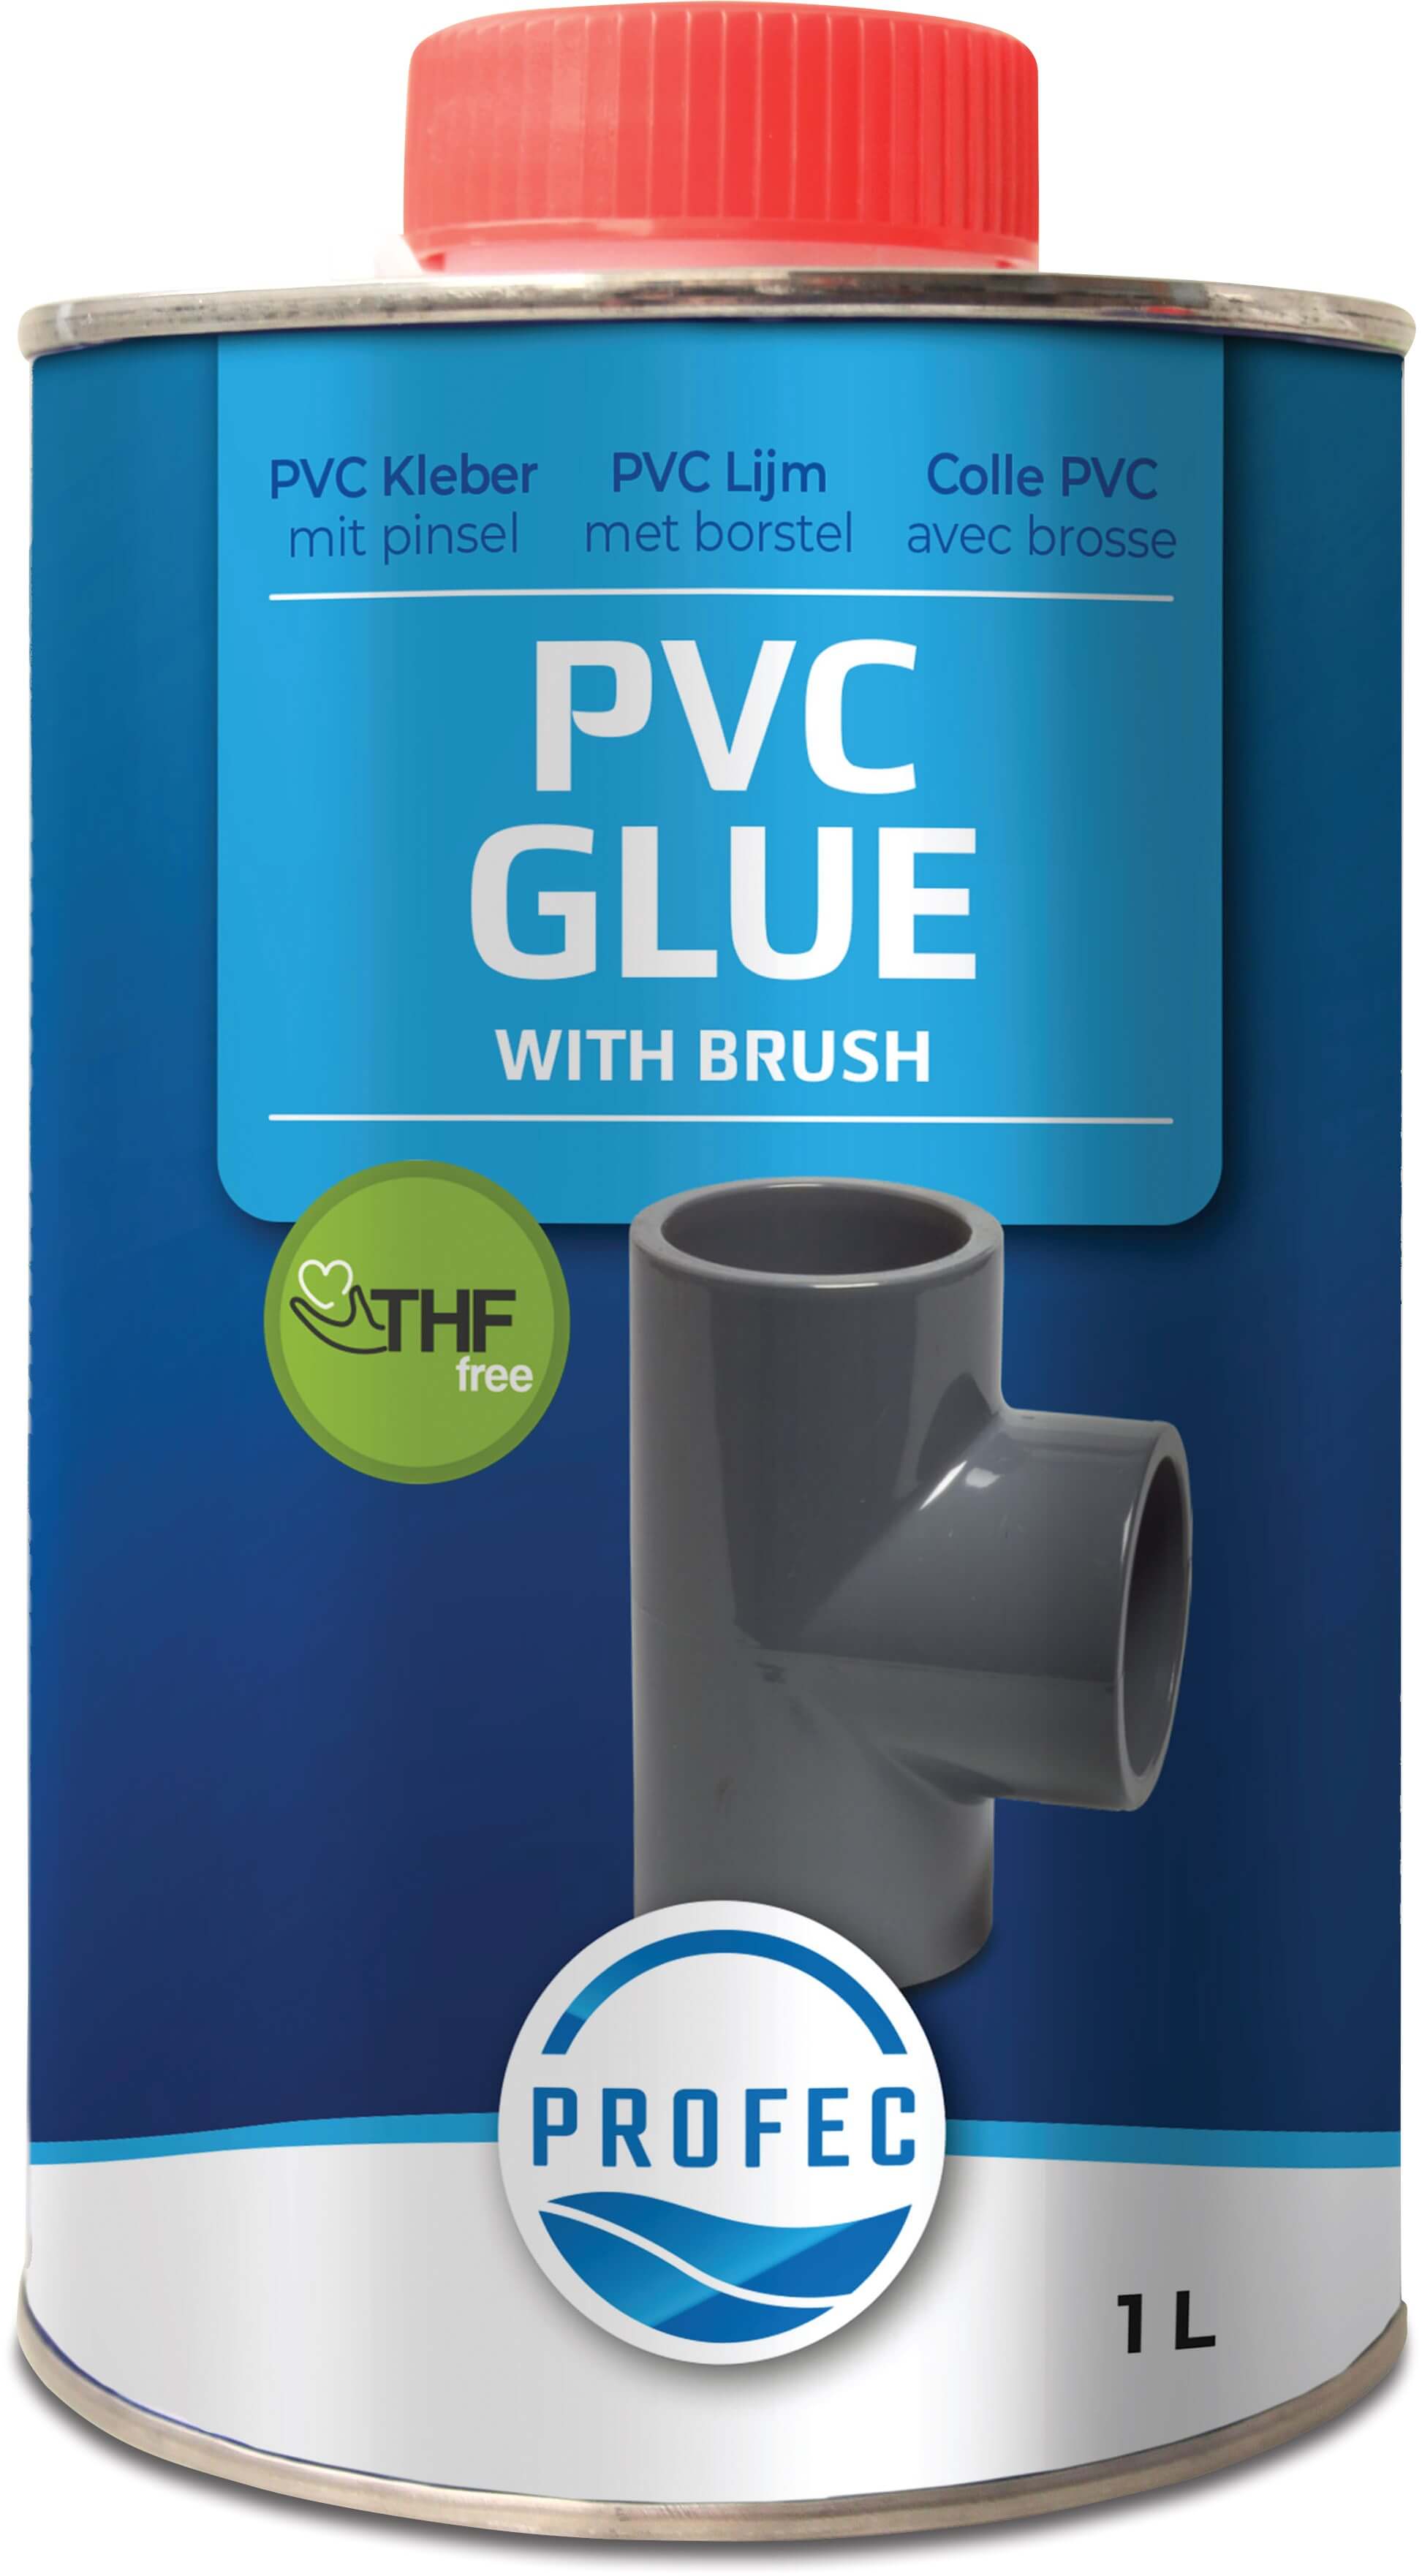 Profec PVC glue 0,25ltr with brush type THF free label EN/DE/NL/FR